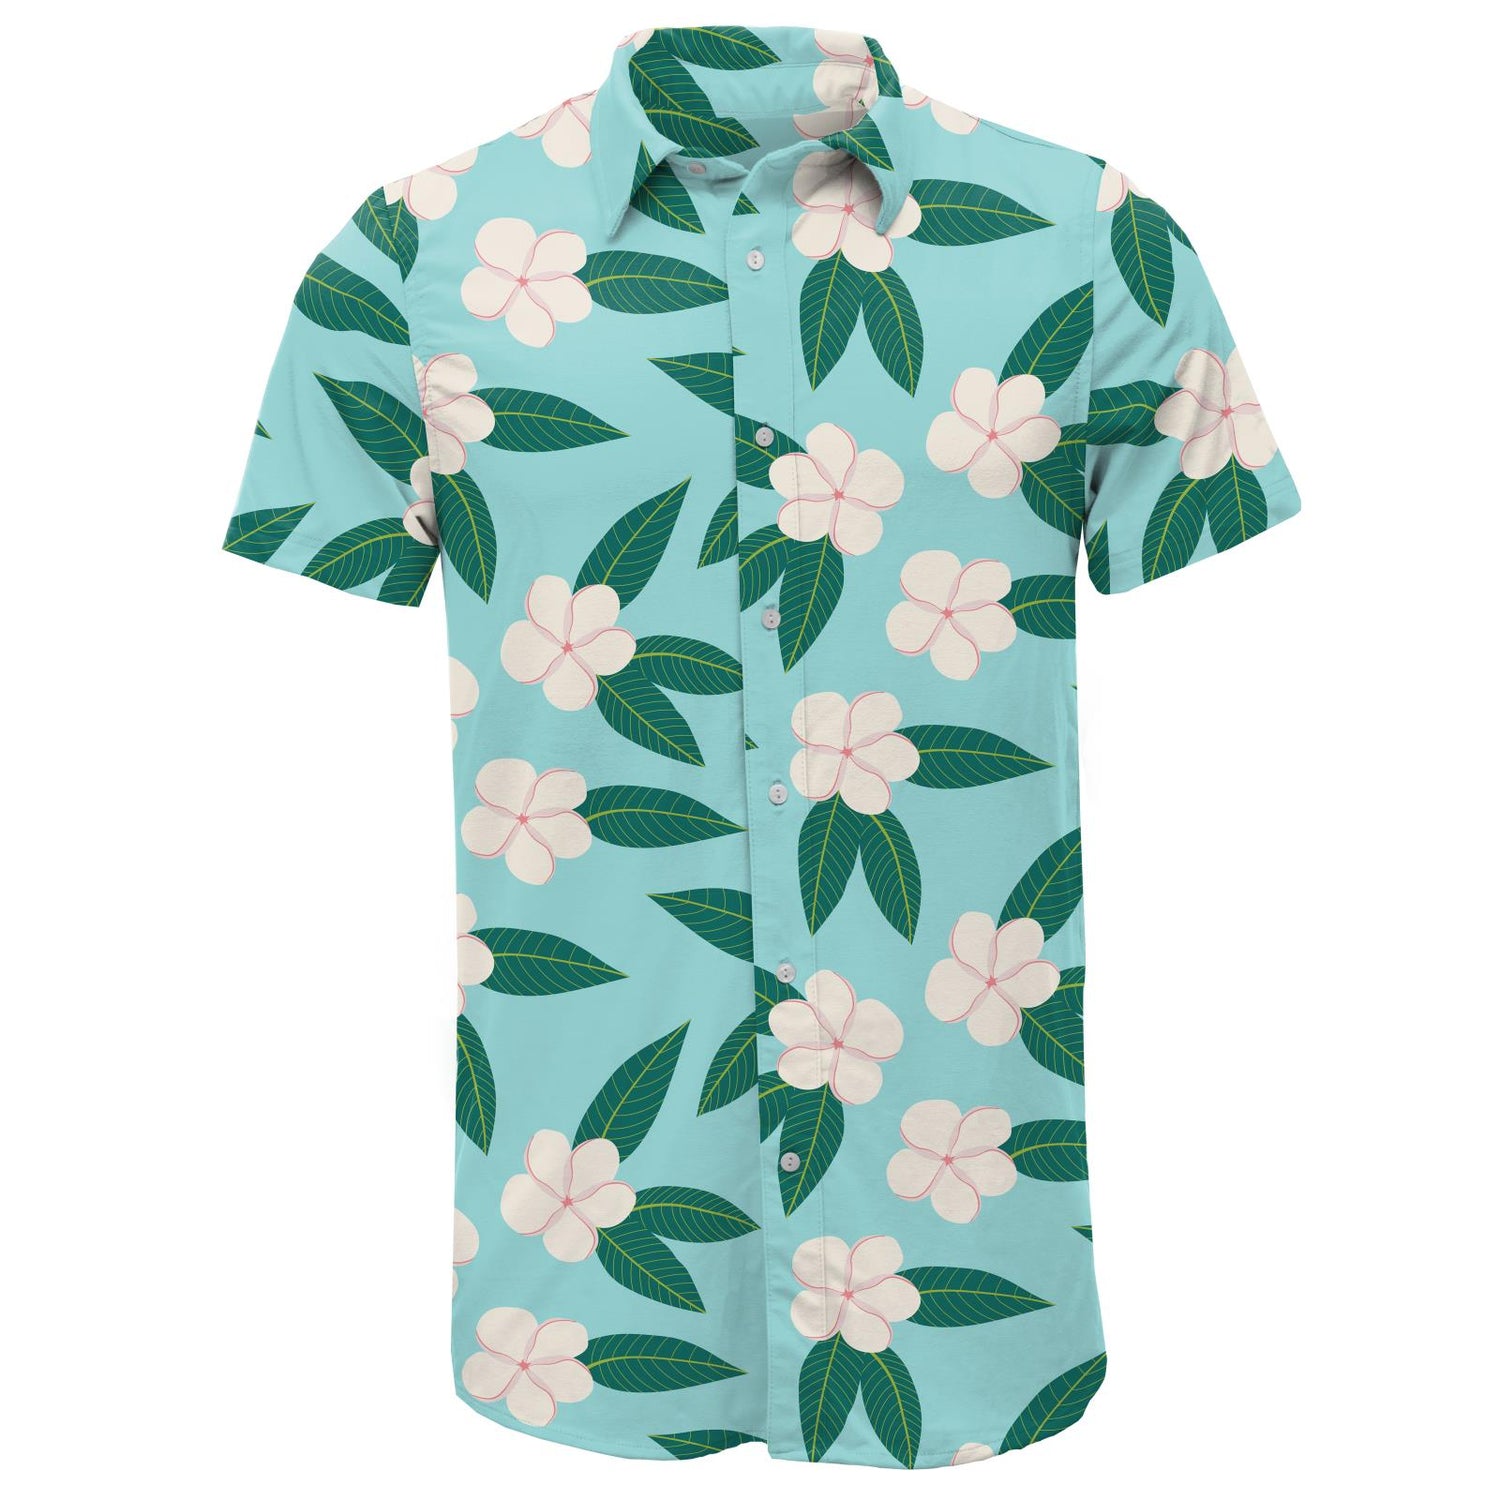 Men's Print Short Sleeve Button Down Shirt in Summer Sky Plumeria